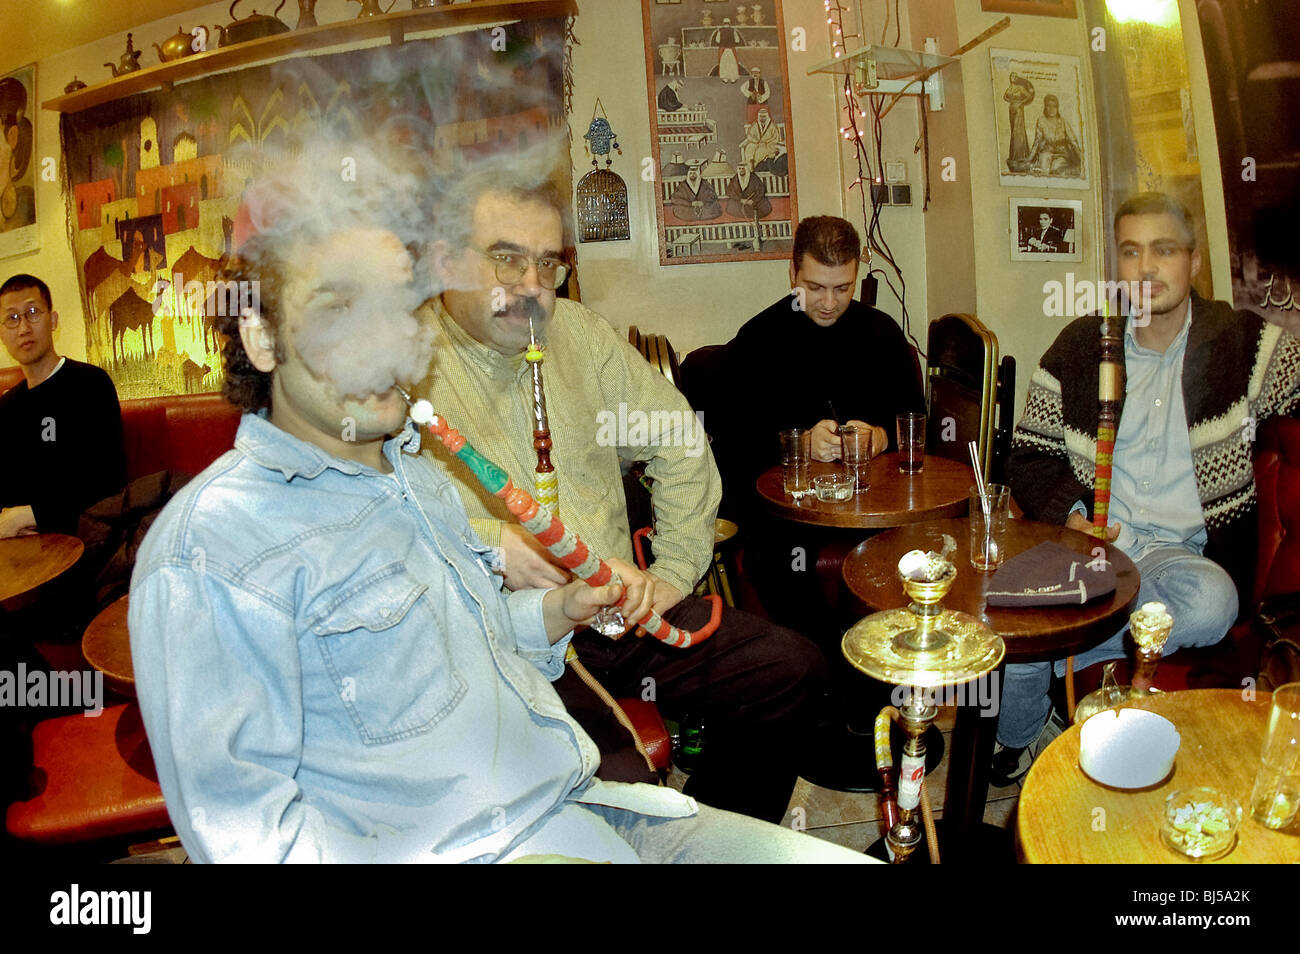 PARIS, Cafe, France - Arab Men Smoking Traditional Pipe Hookah in "Oum  Kalthoum" Paris coffee shop Stock Photo - Alamy